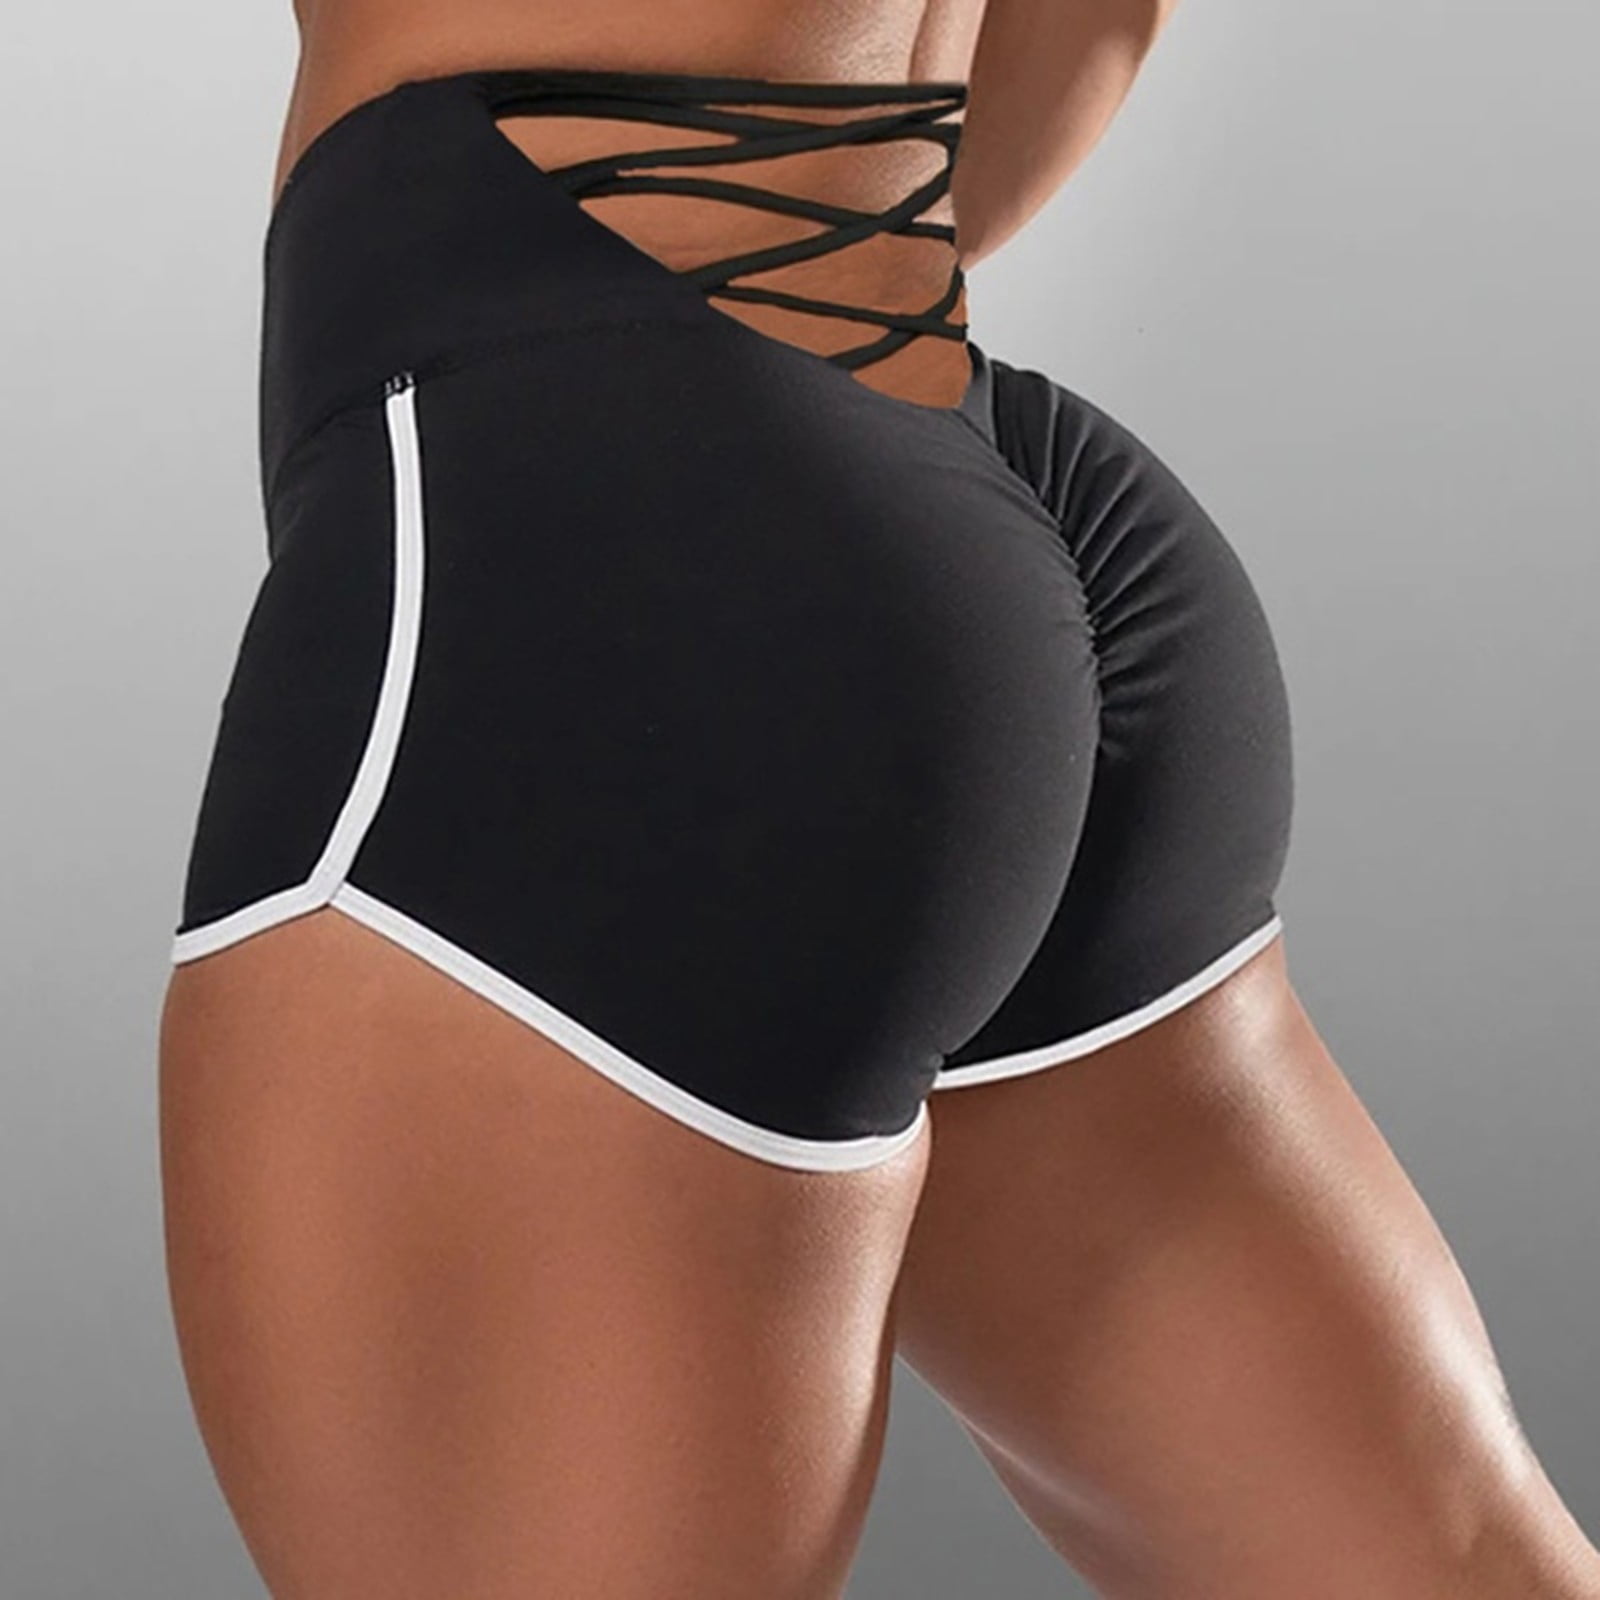 nsendm Unisex Pants Adult Yoga Pants Petite Short with Pockets Women's Hip  Lifting Exercise Fitness Running High Waist Yoga Petite Yoga(Khaki, L)